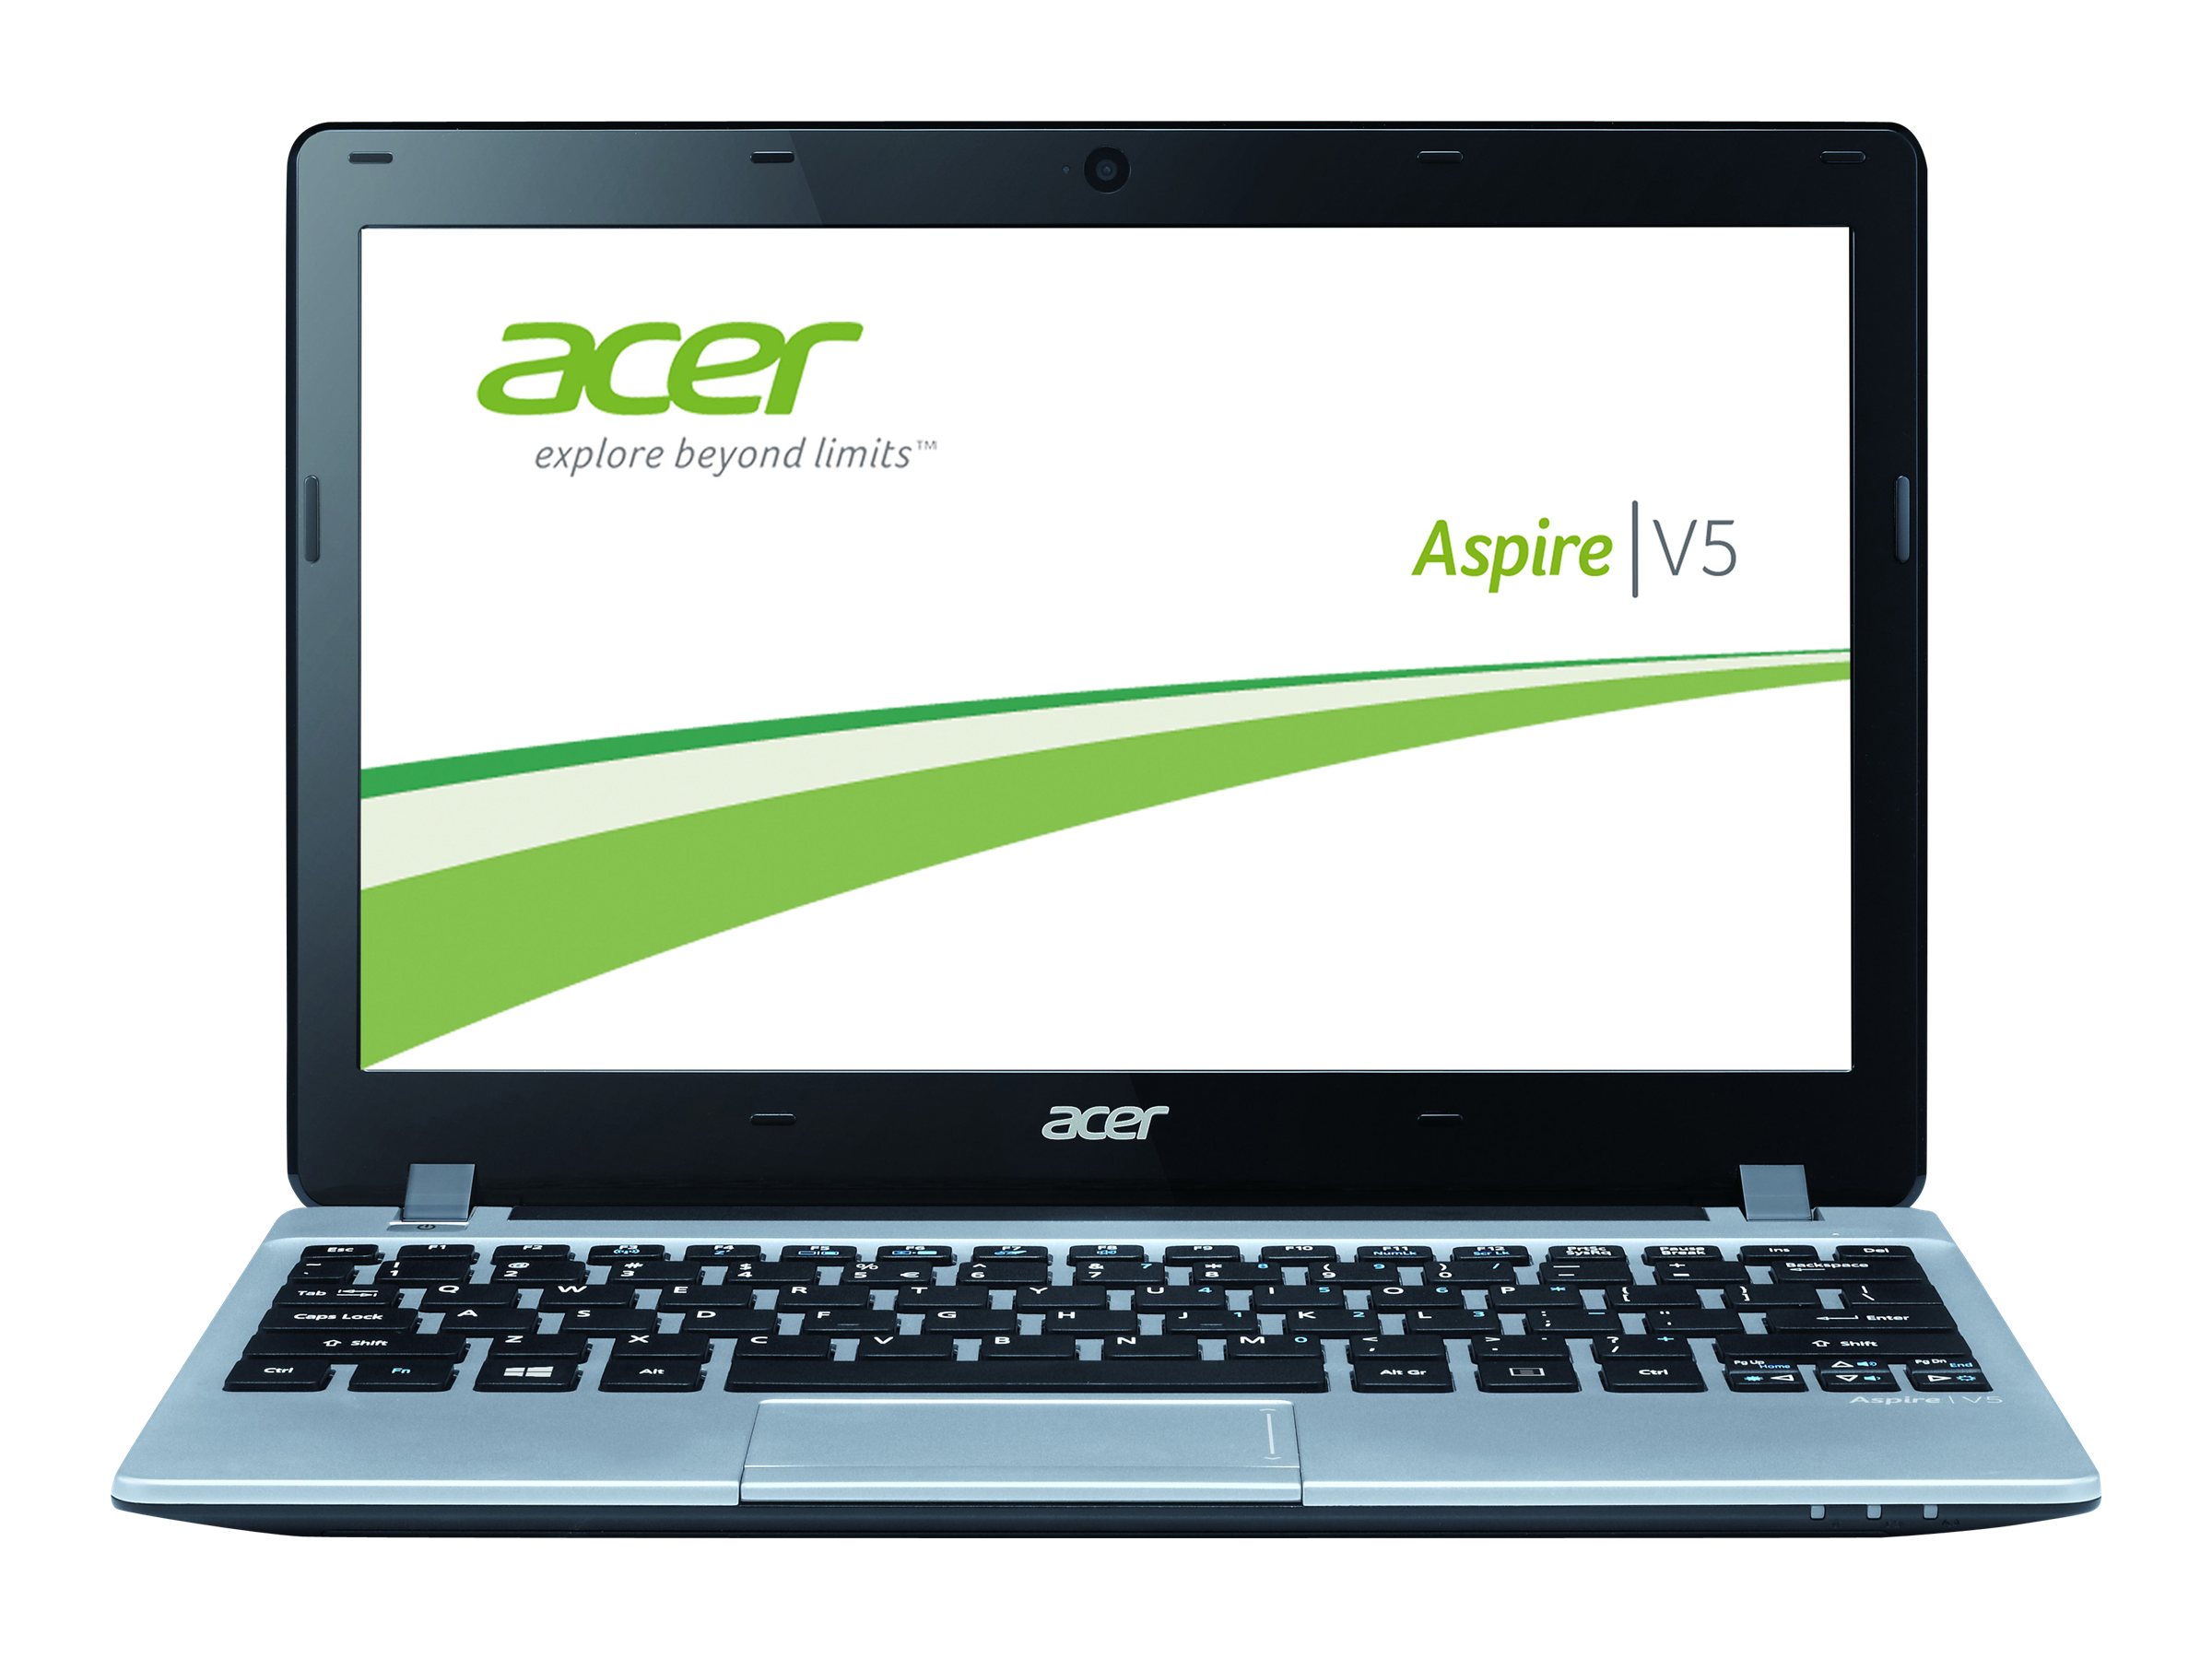 Acer Aspire V5 (123)